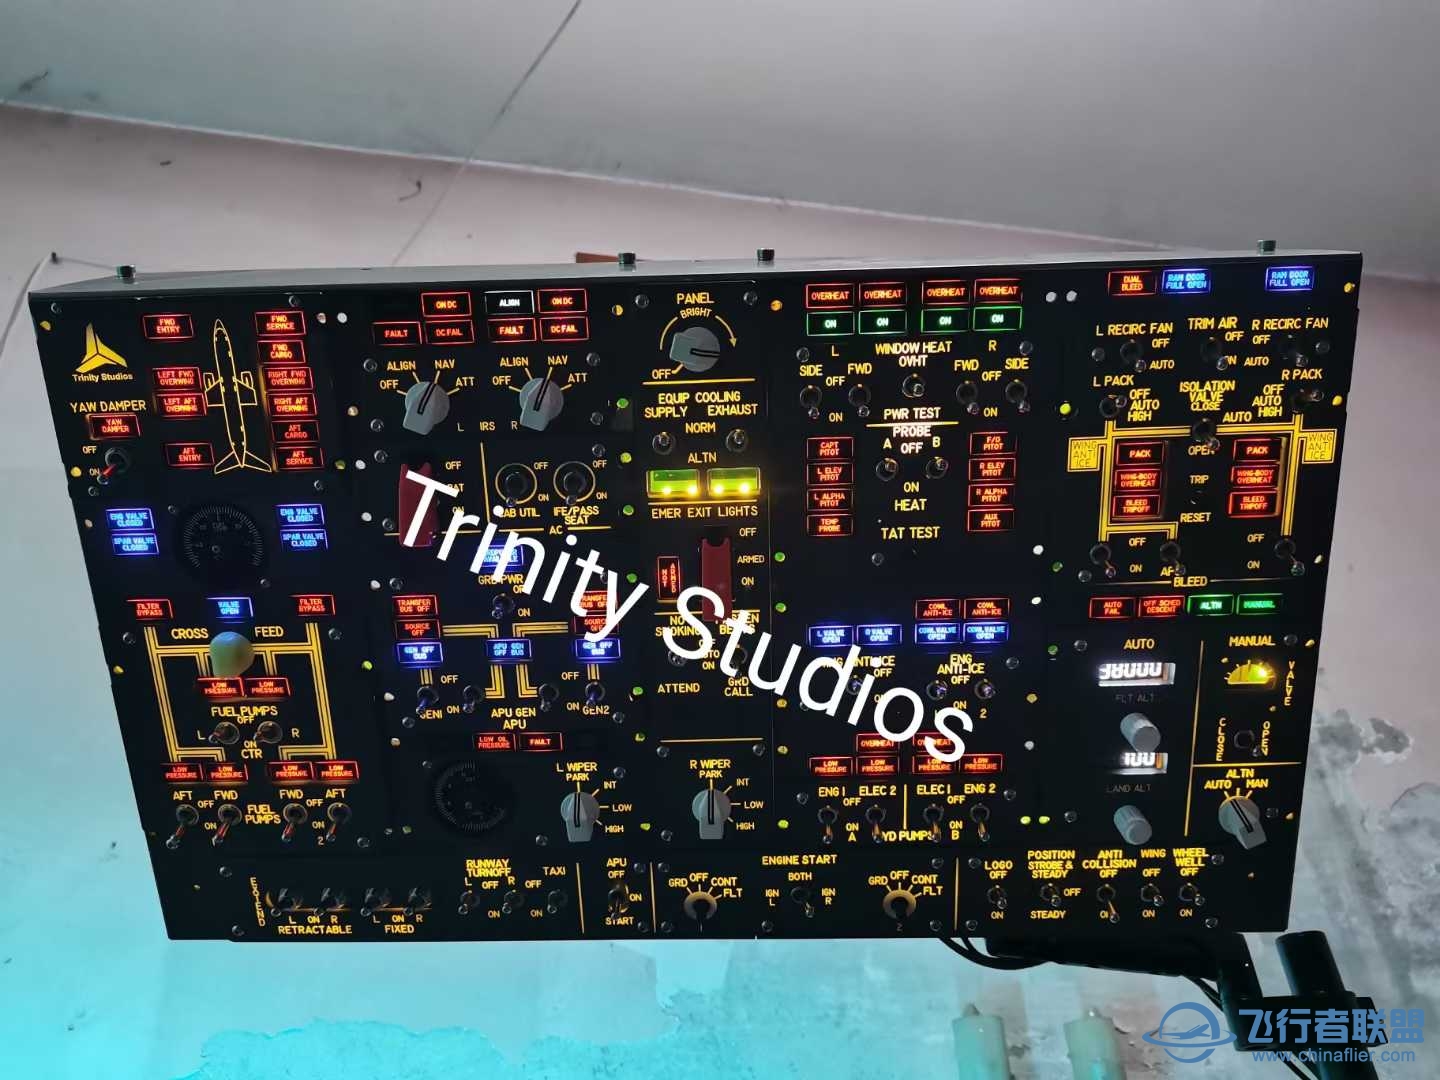 Trinity Studios 新品预告 ——家用版迷你738顶板-3544 